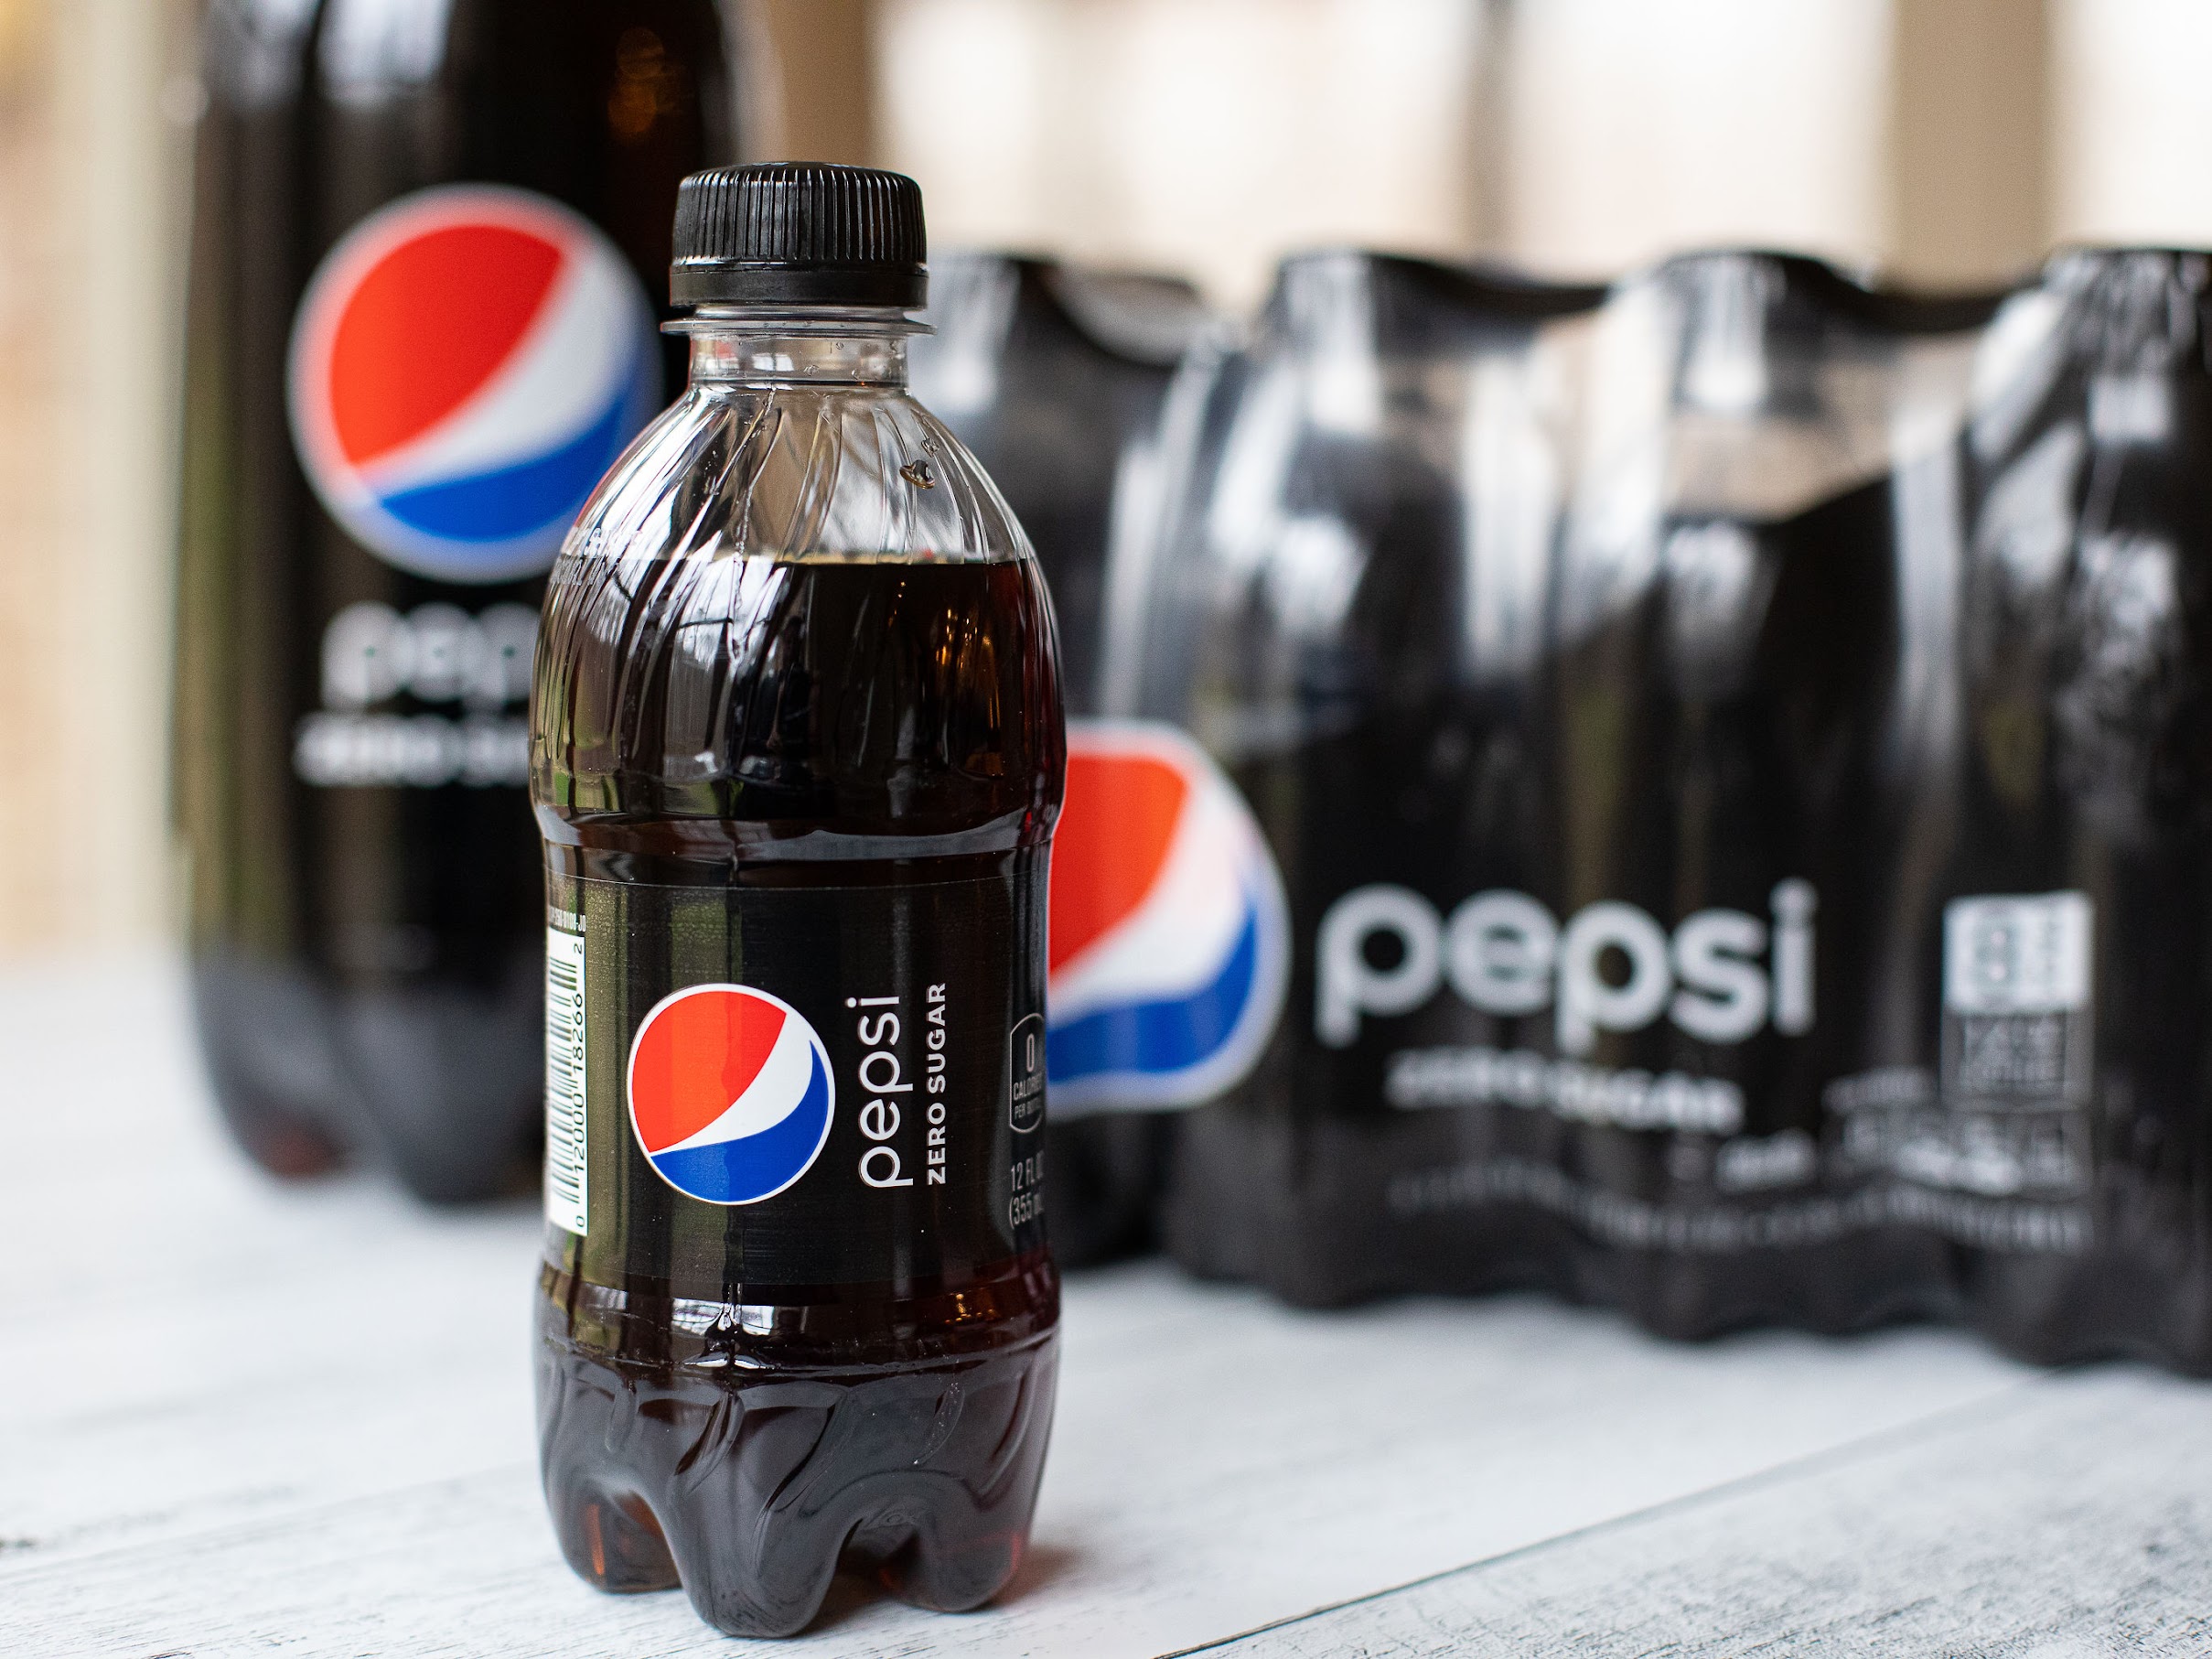 Pepsi 6-Pack or 8-Pack Bottles Of Soda Just $2.50 At Publix